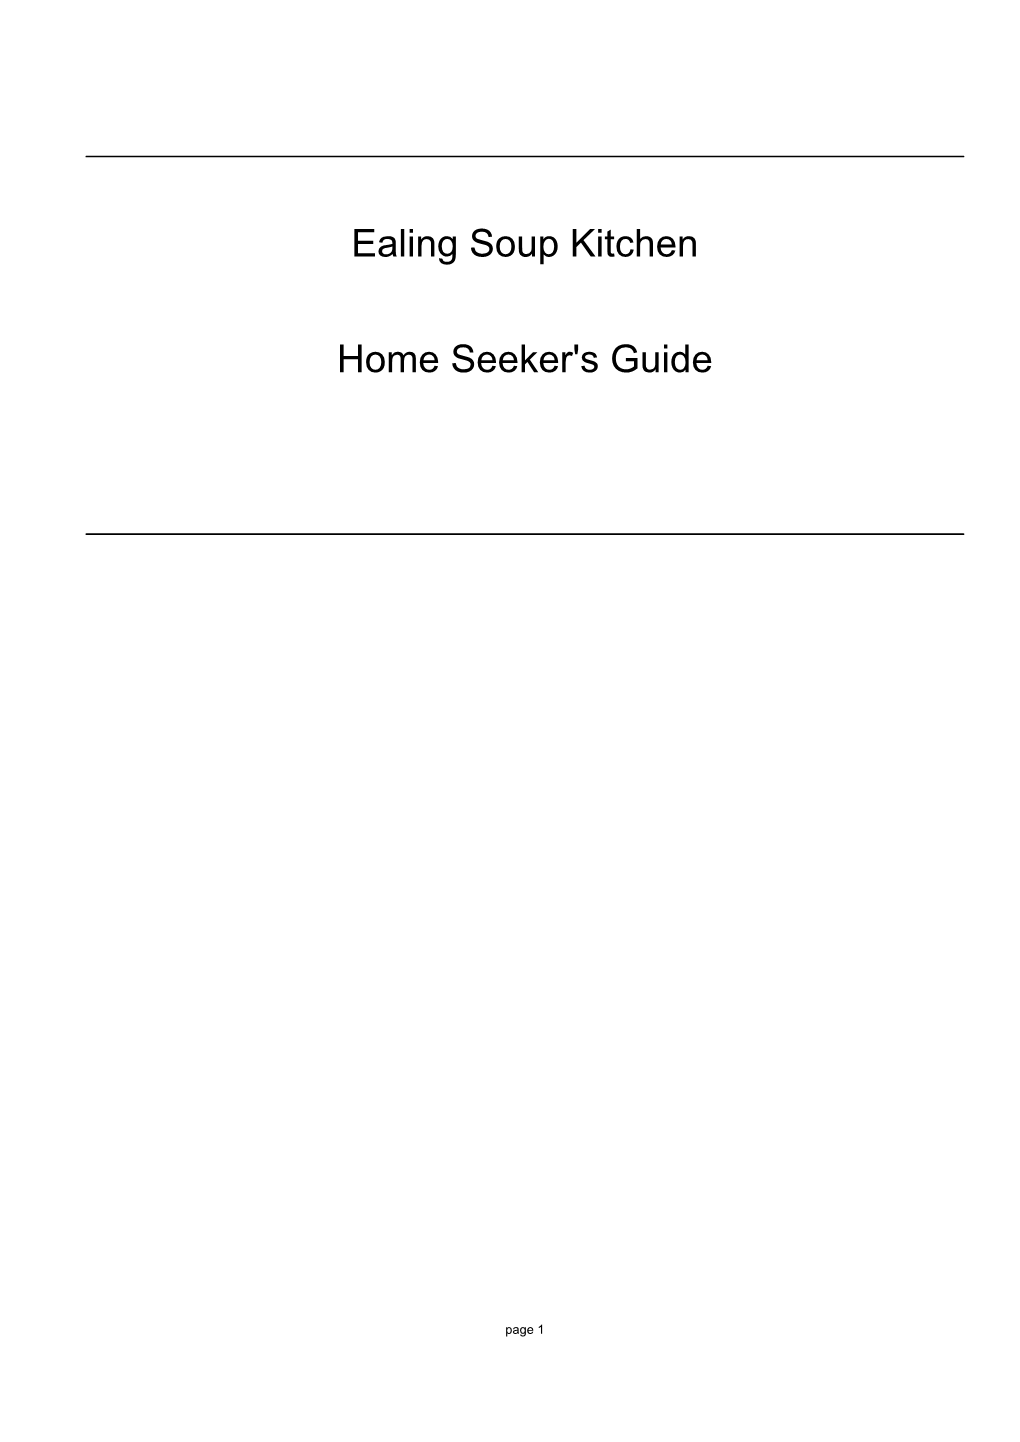 Ealing Soup Kitchen Home Seeker's Guide Releasecandidate001